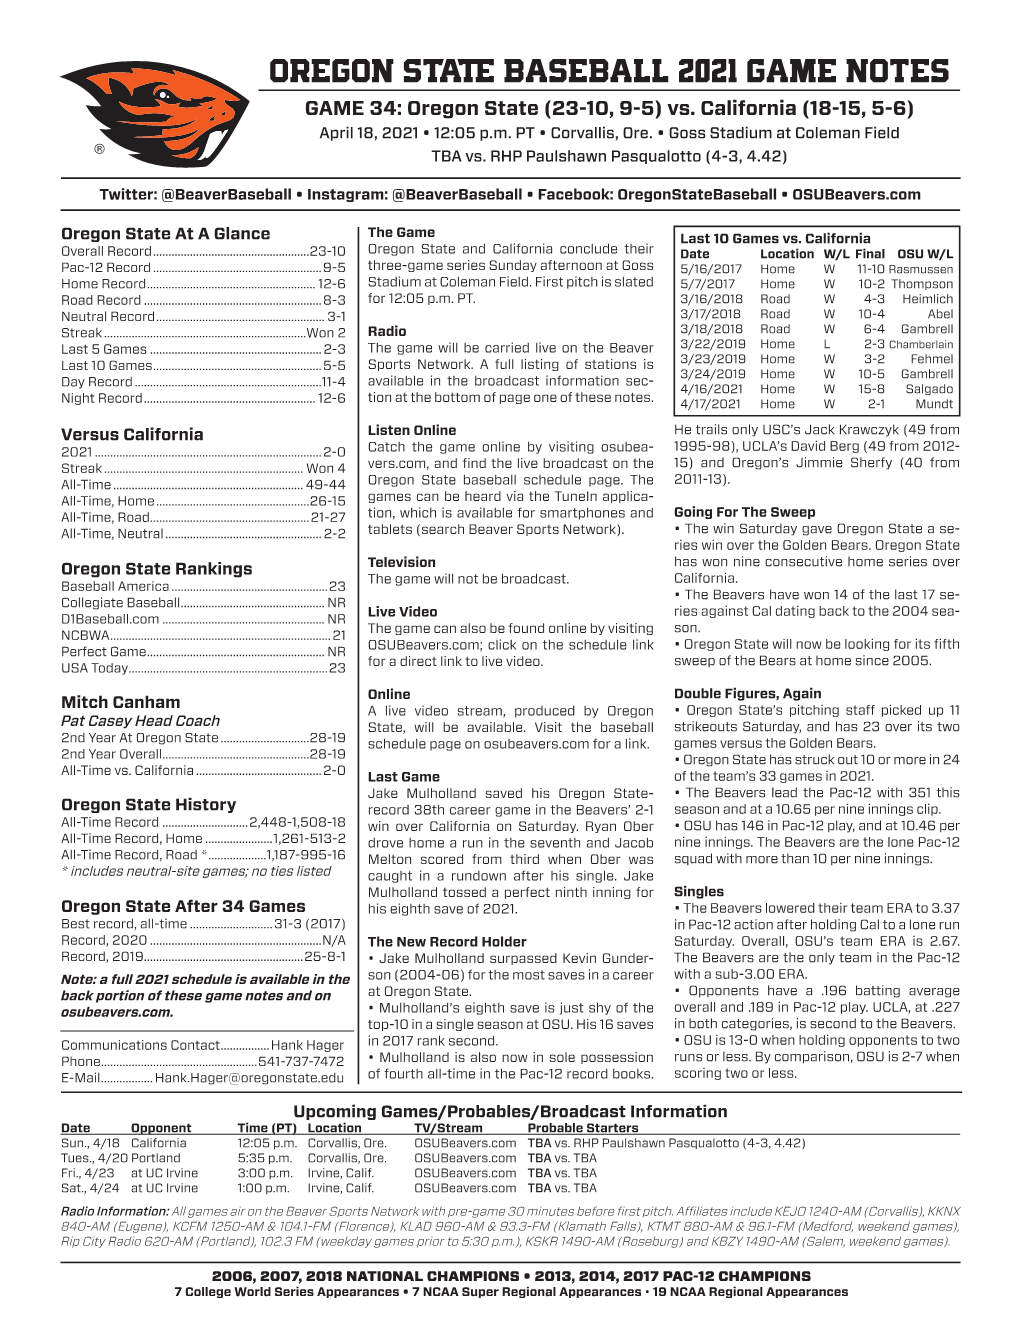 OREGON STATE BASEBALL 2021 GAME NOTES GAME 34: Oregon State (23-10, 9-5) Vs